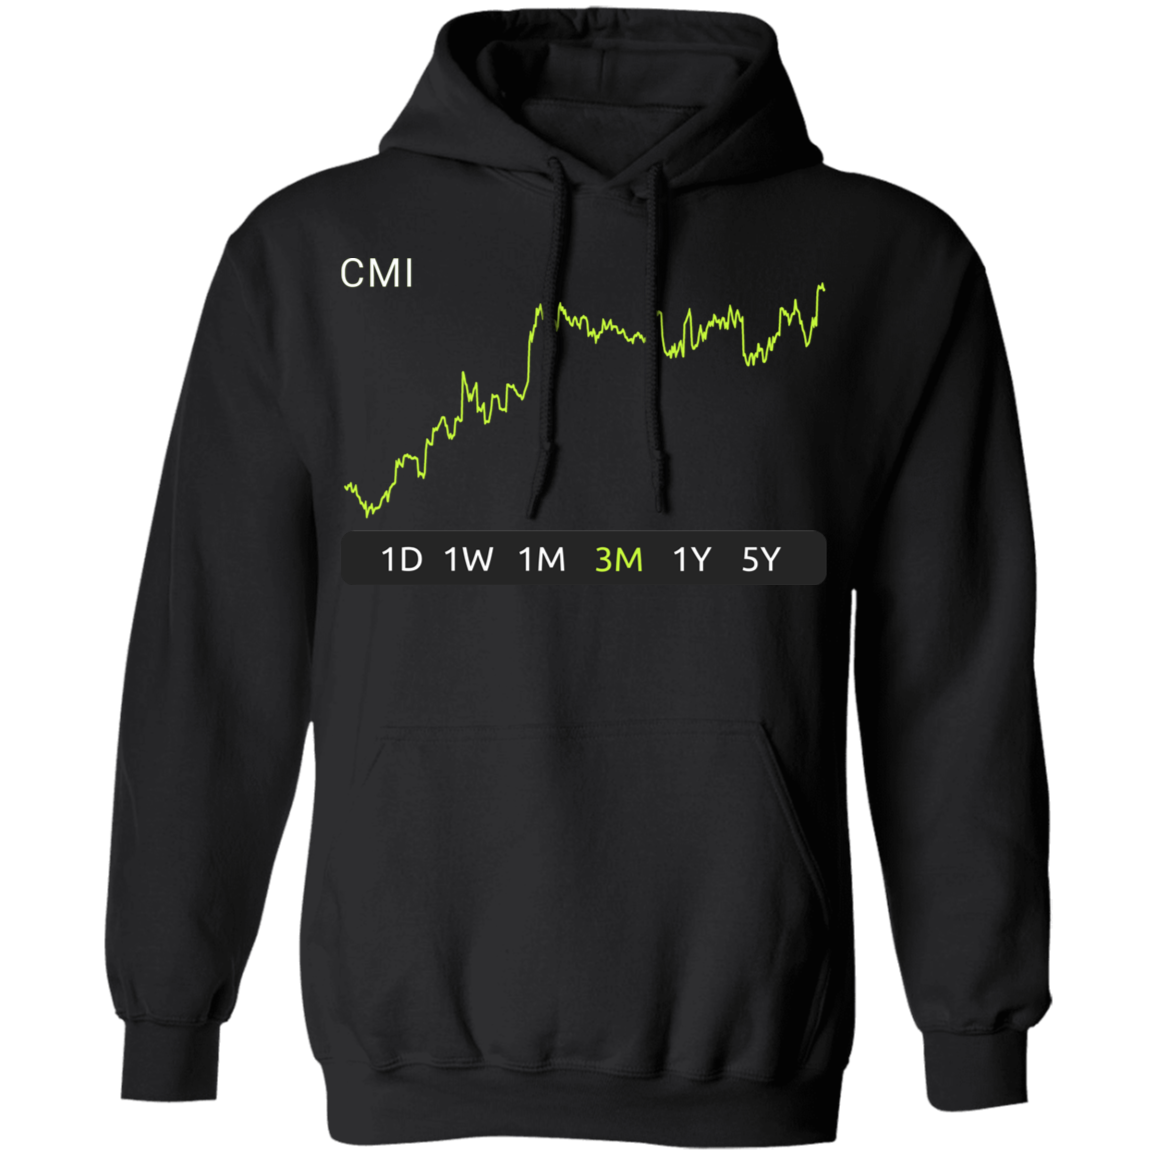 CMI Stock 3m Pullover Hoodie